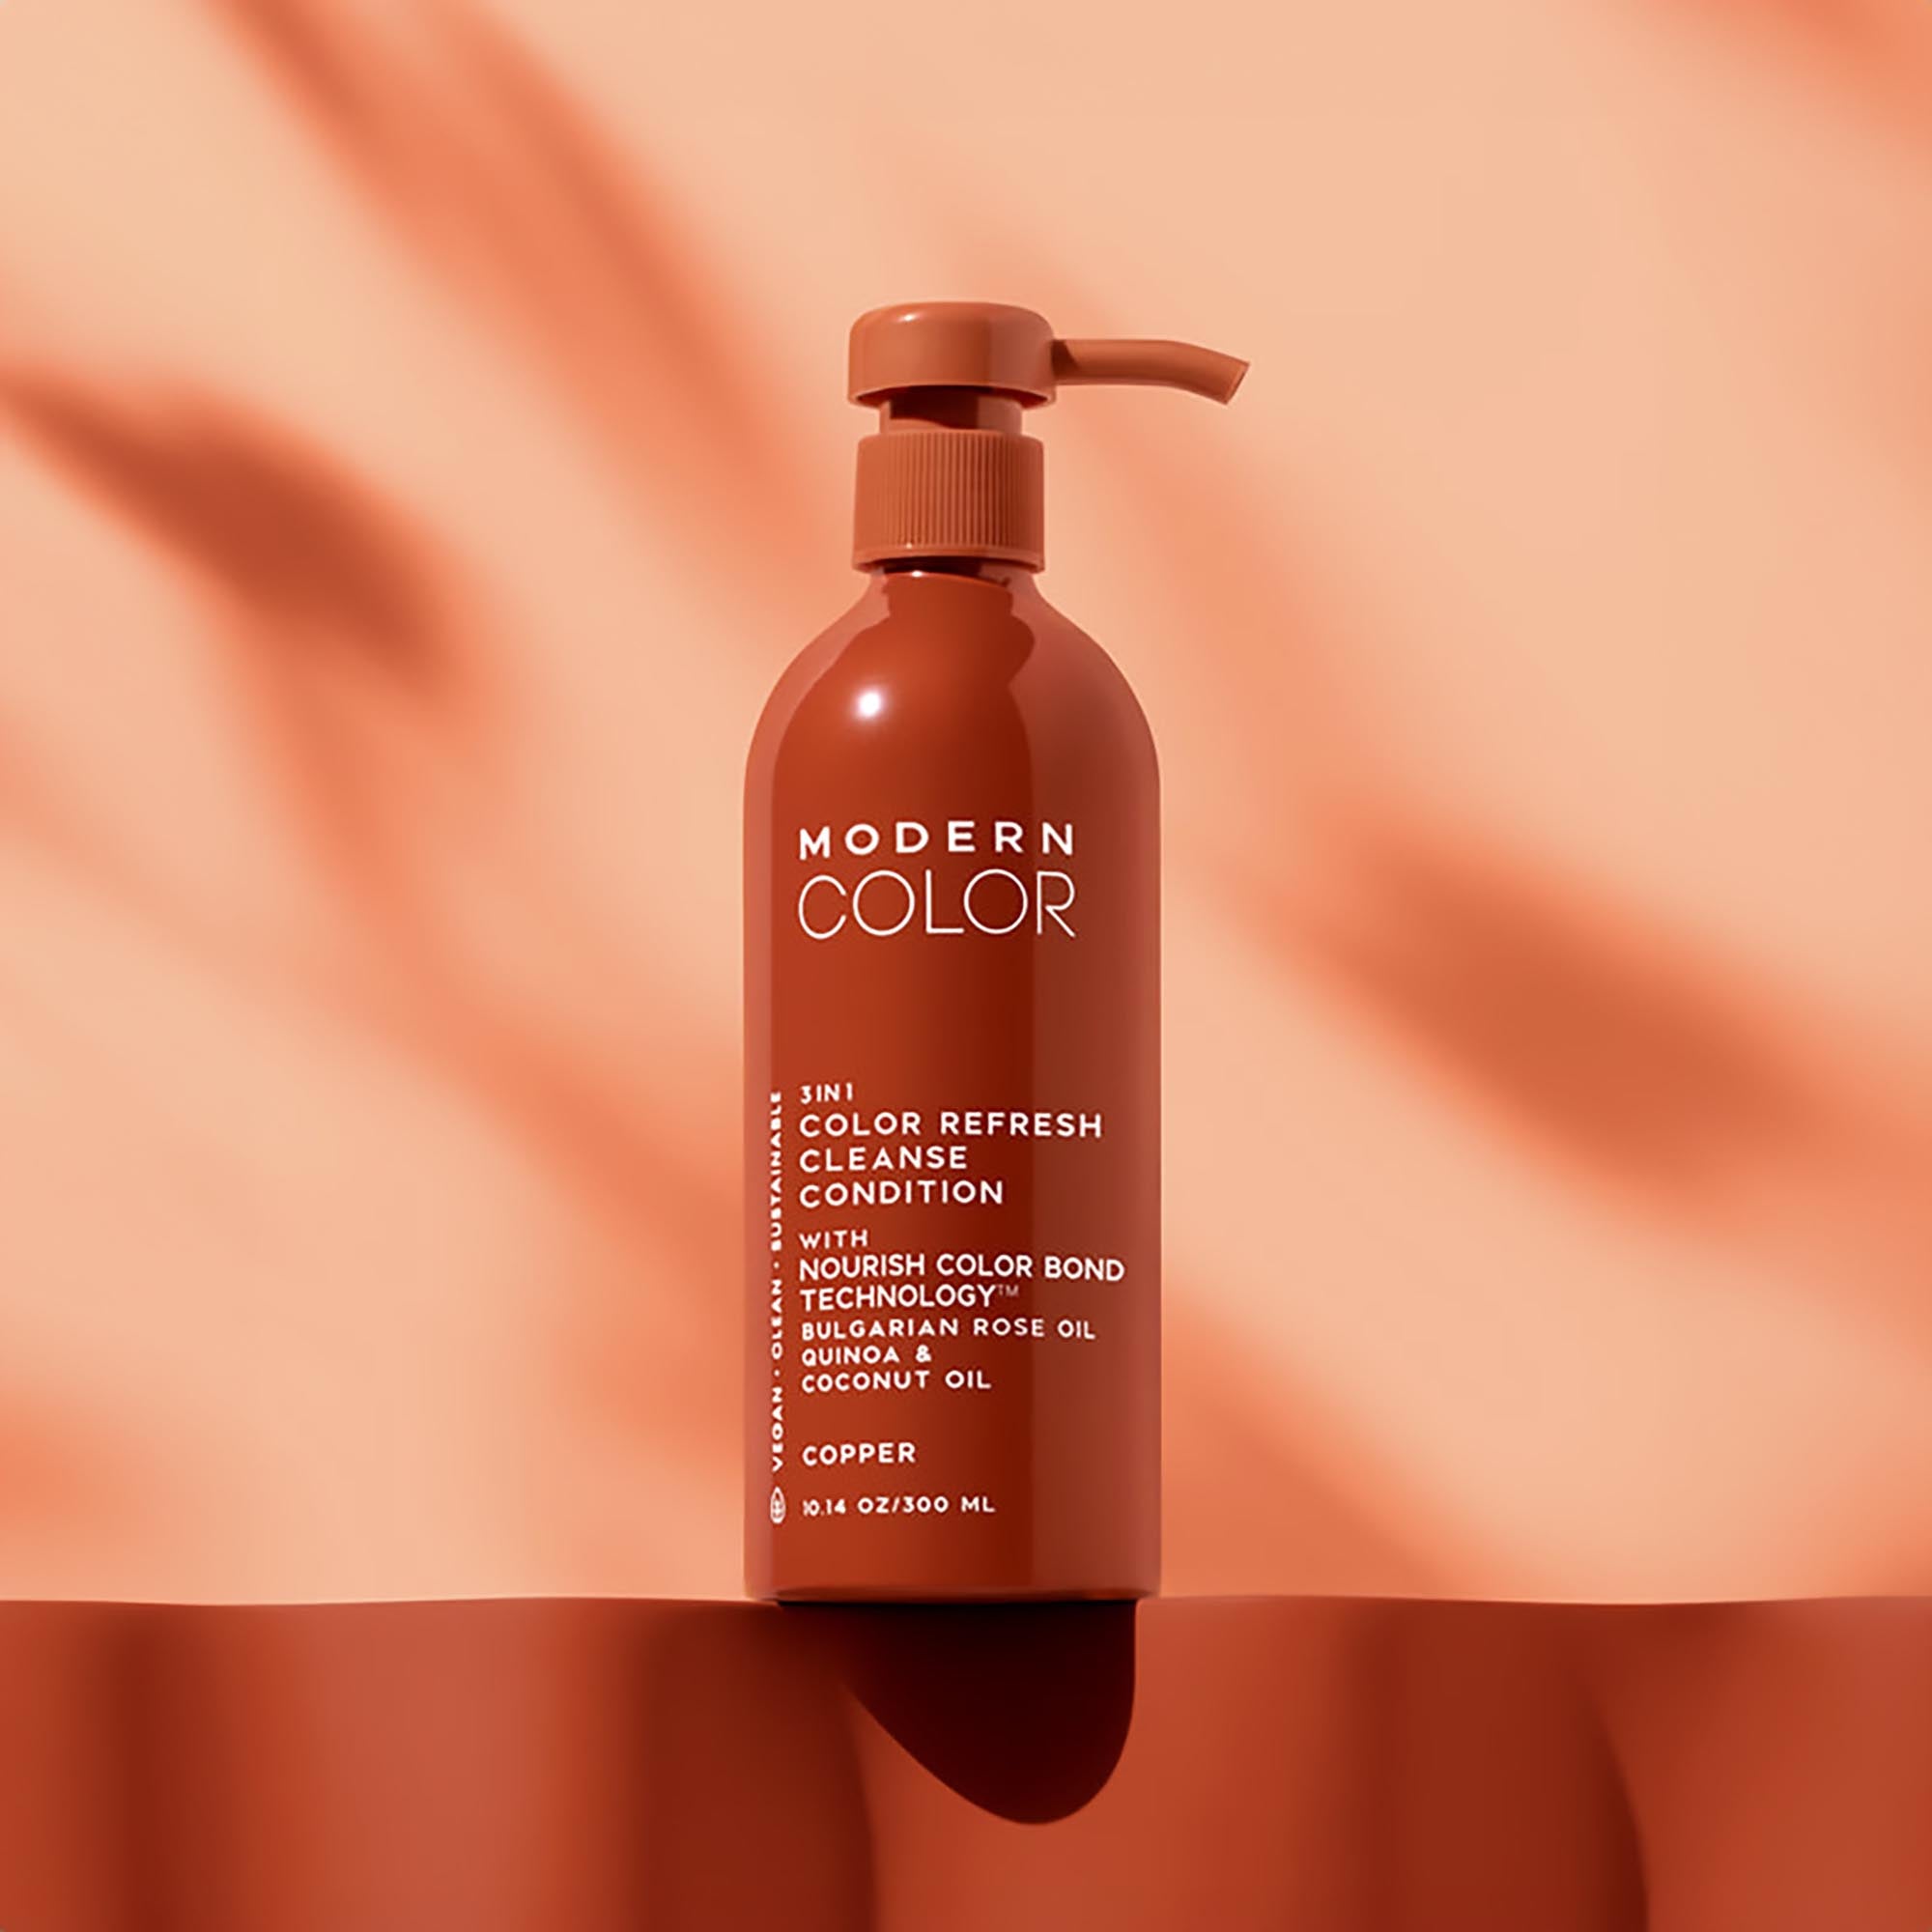 Modern Color 3-in-1 Color Refresh Cleanse Condition - Copper / COPPER